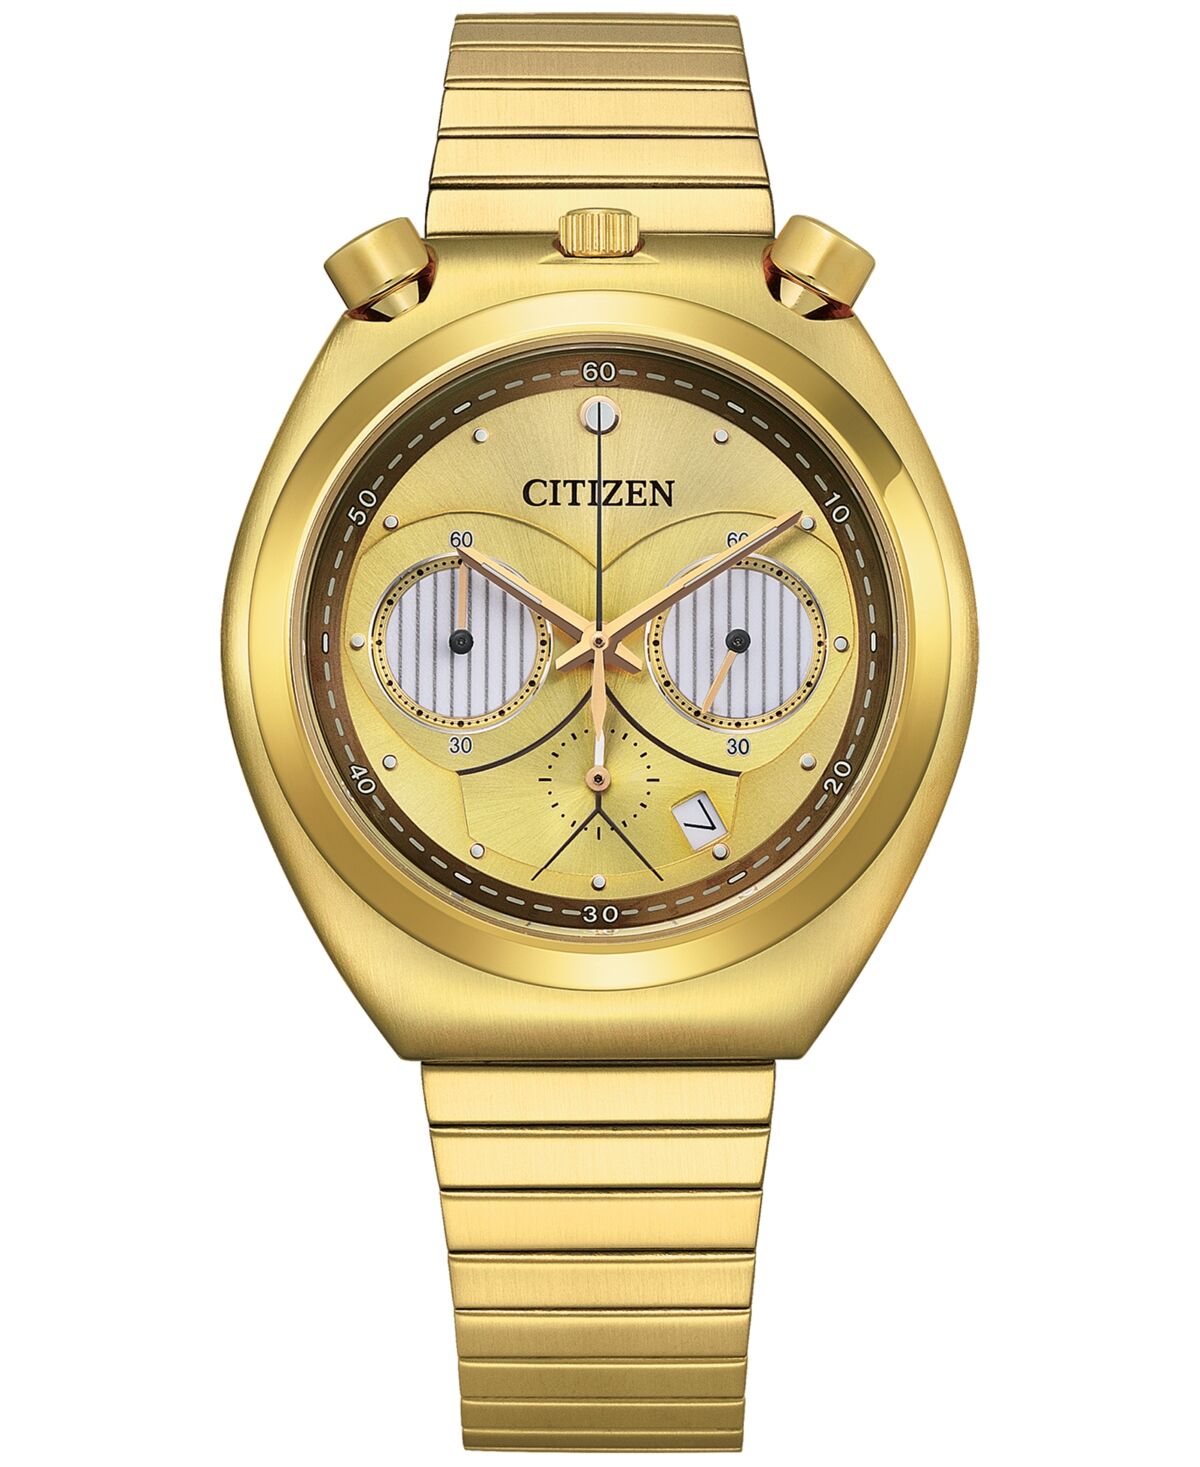 Citizen Men's Chronograph Star Wars C-3PO Gold-Tone Stainless Steel Bracelet Watch 38mm - Gold-tone